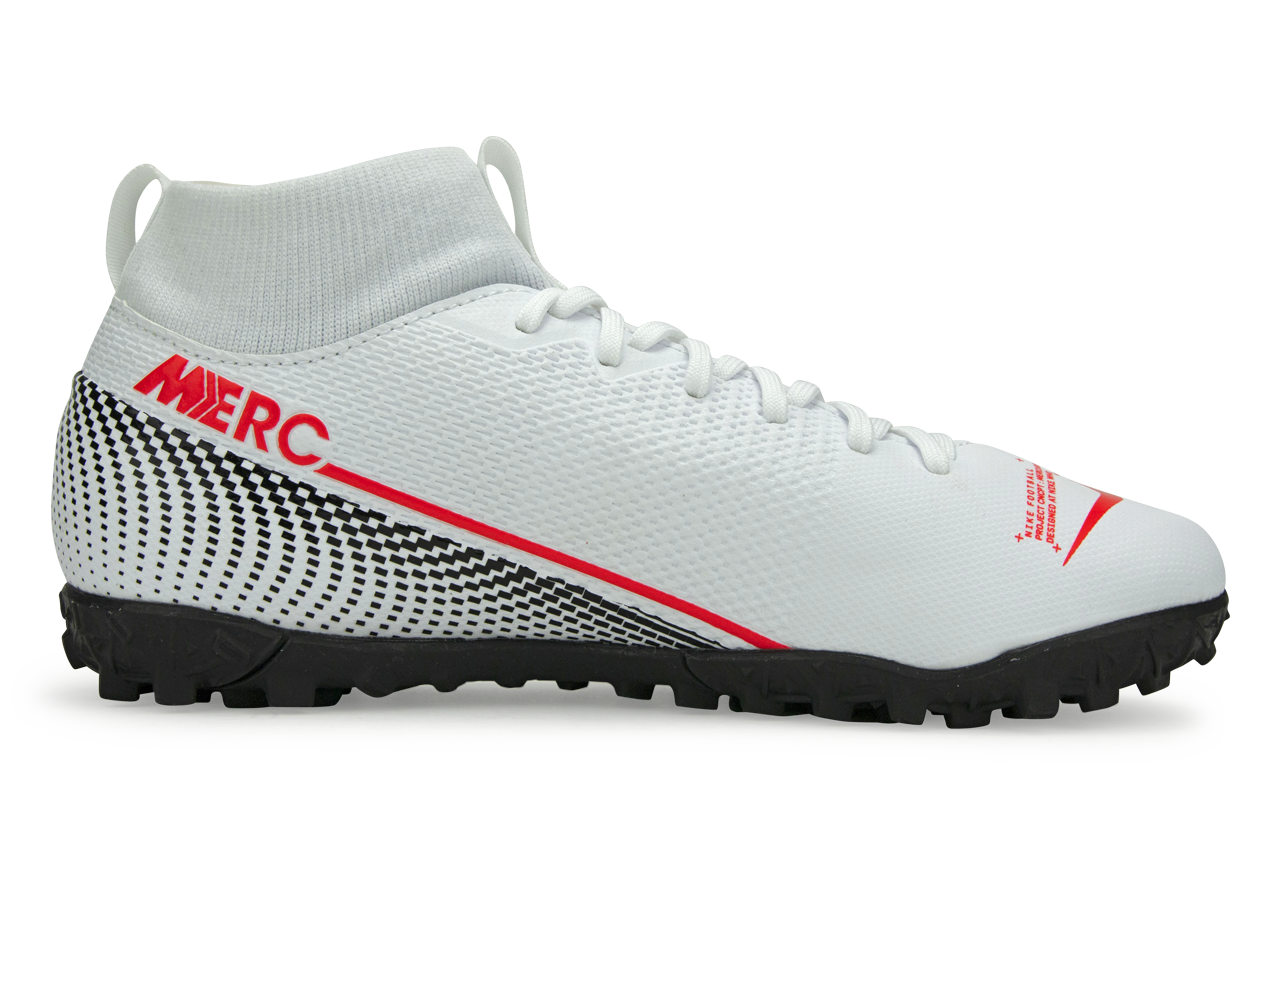 Nike Kids Mercurial Superfly 7 Academy Turf Soccer Shoes White/Laser Crimson/Black